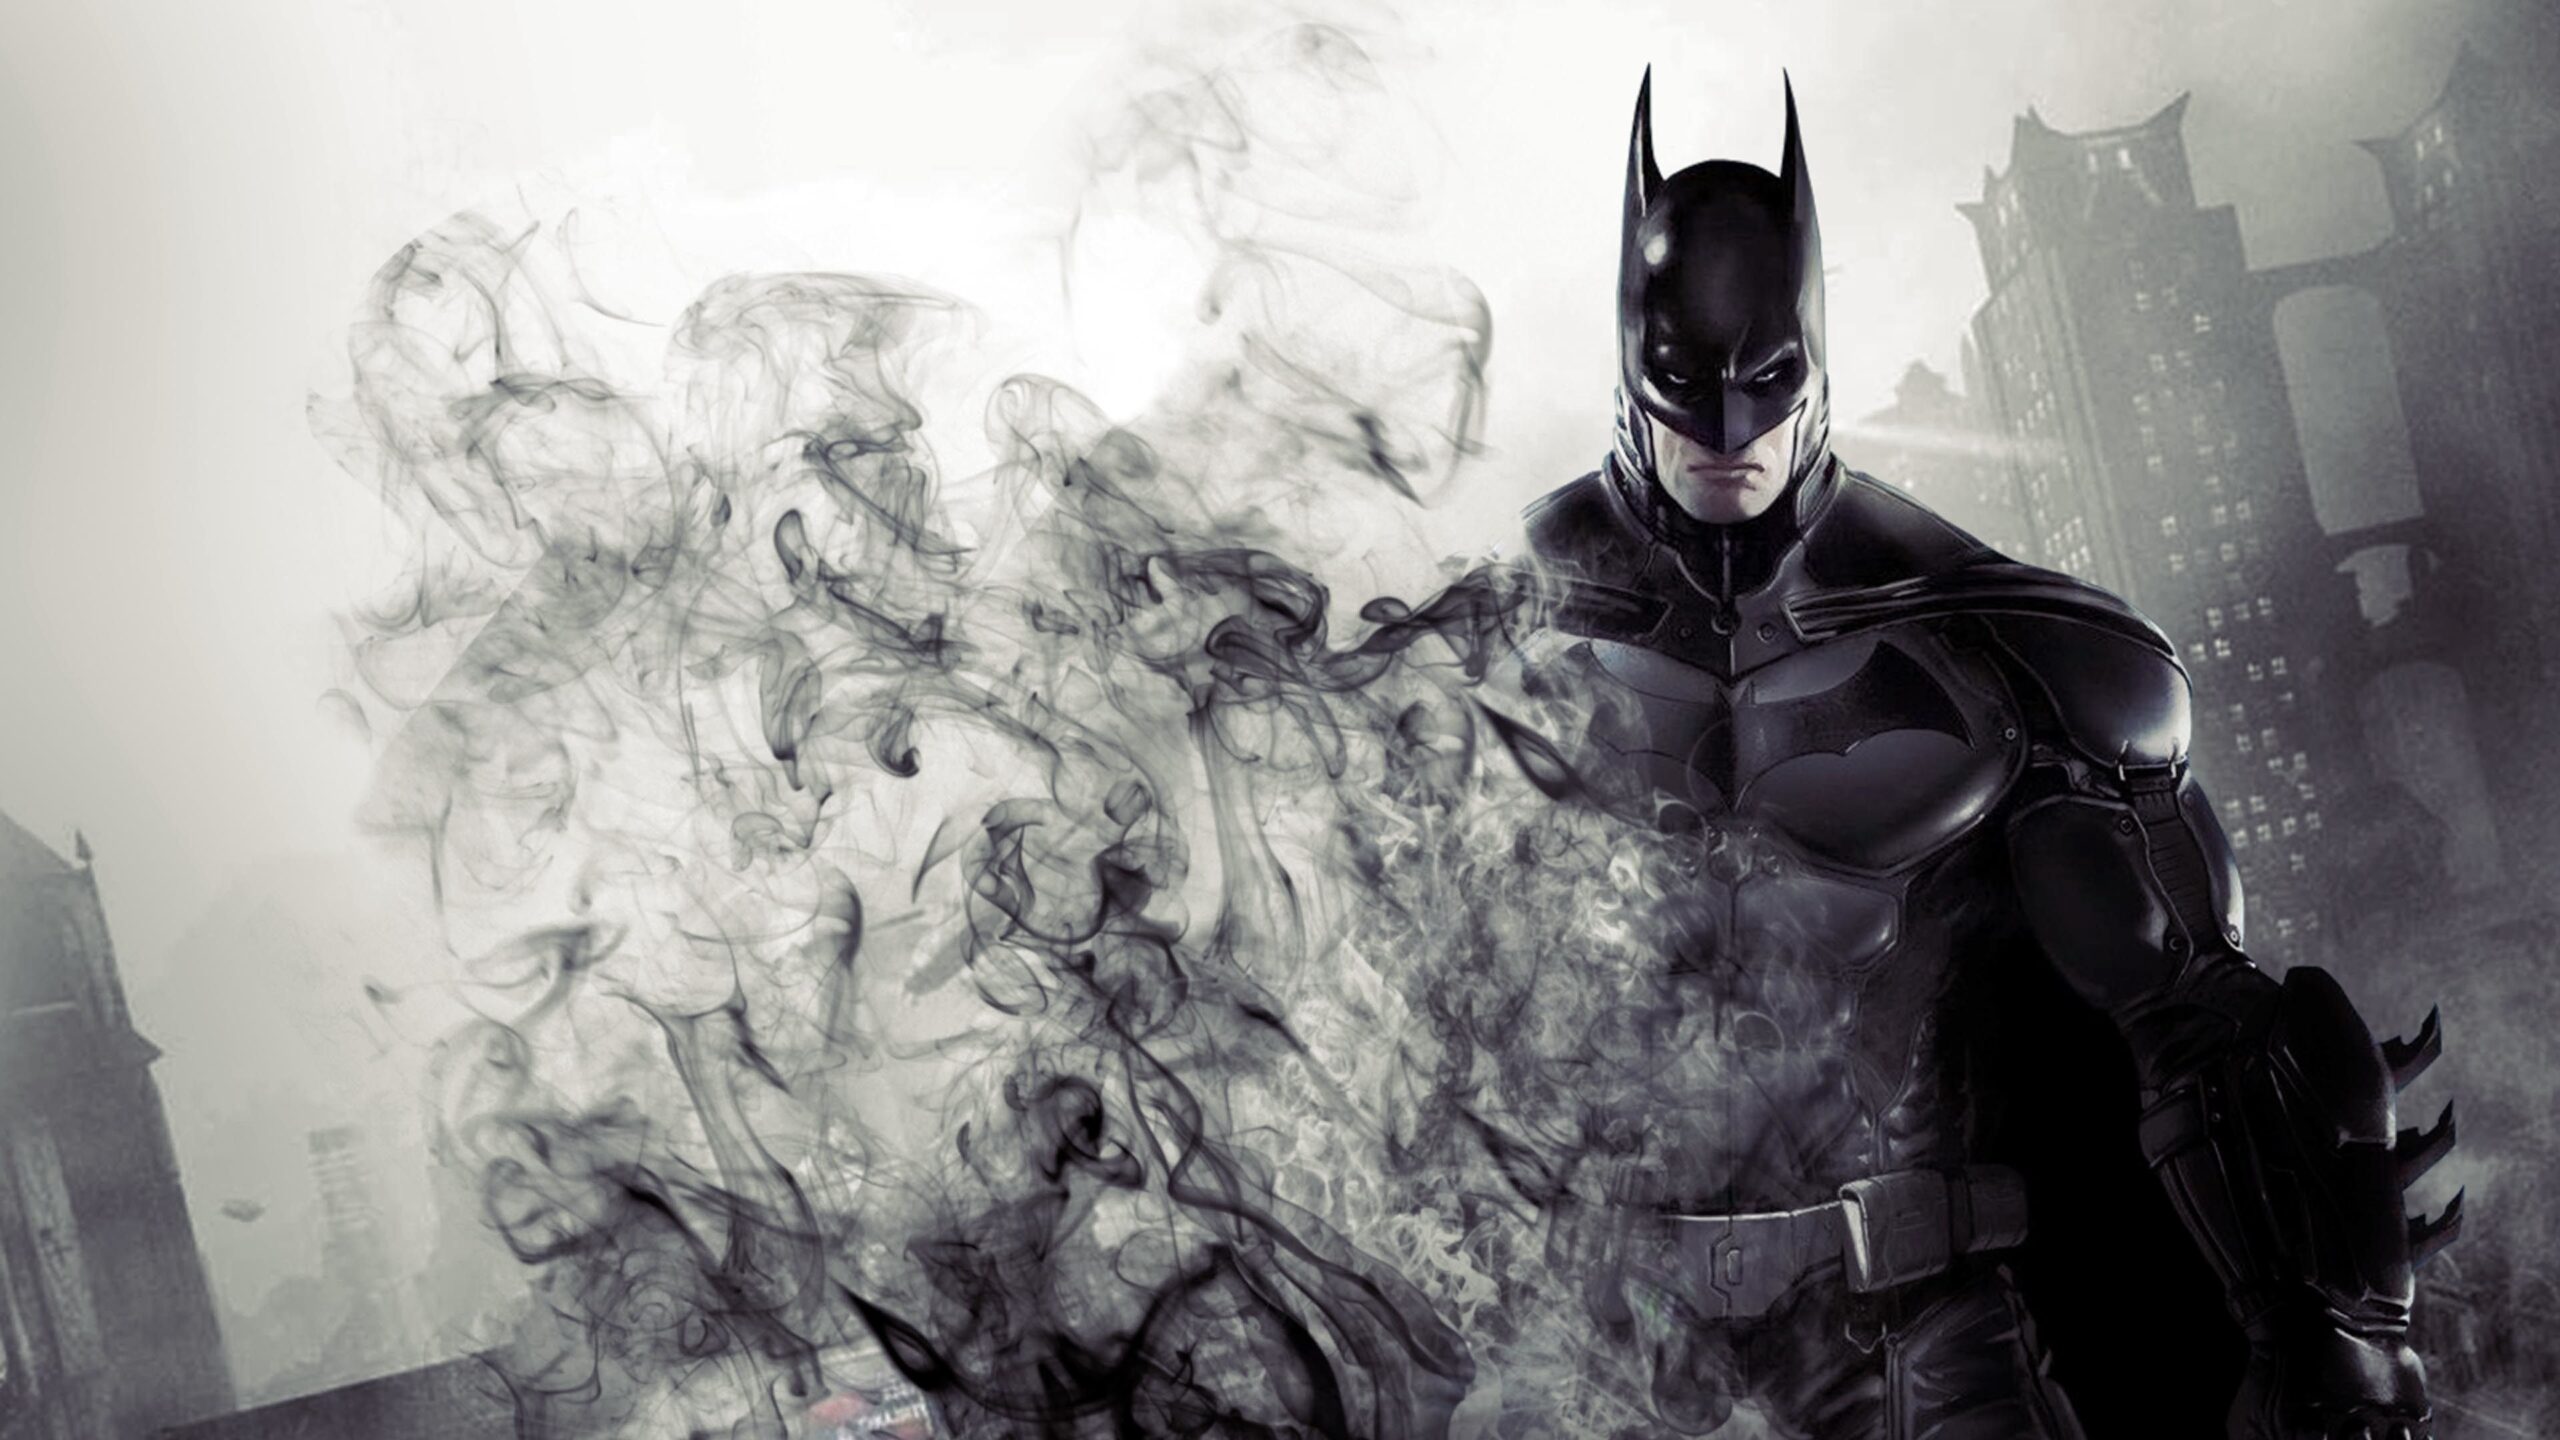 Batman 4k Wallpapers - Top Ultra 4k Batman Backgrounds Download